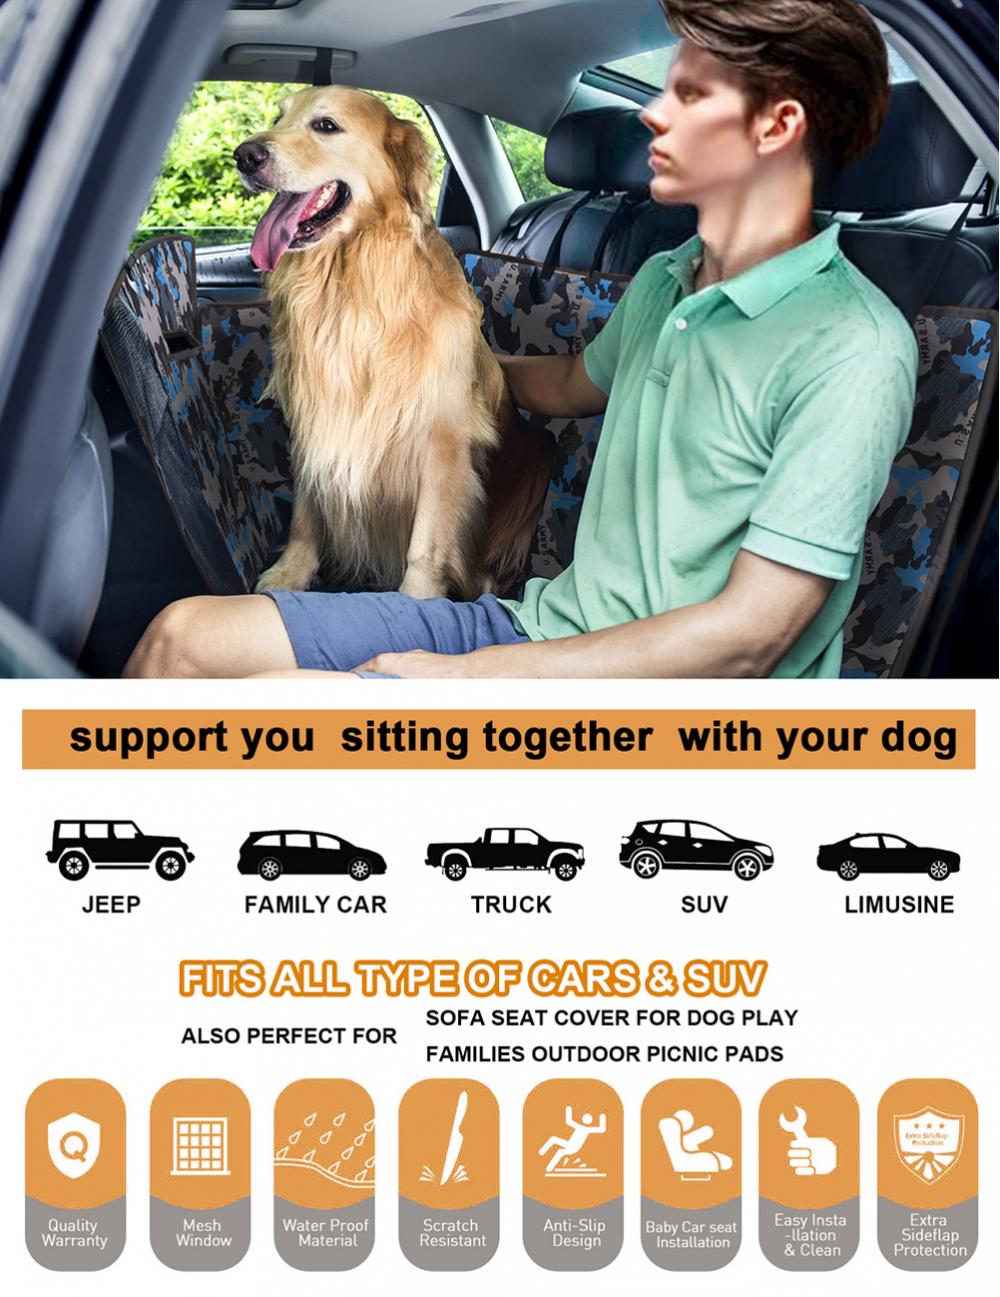 Backseat Dog Car Seat Cover